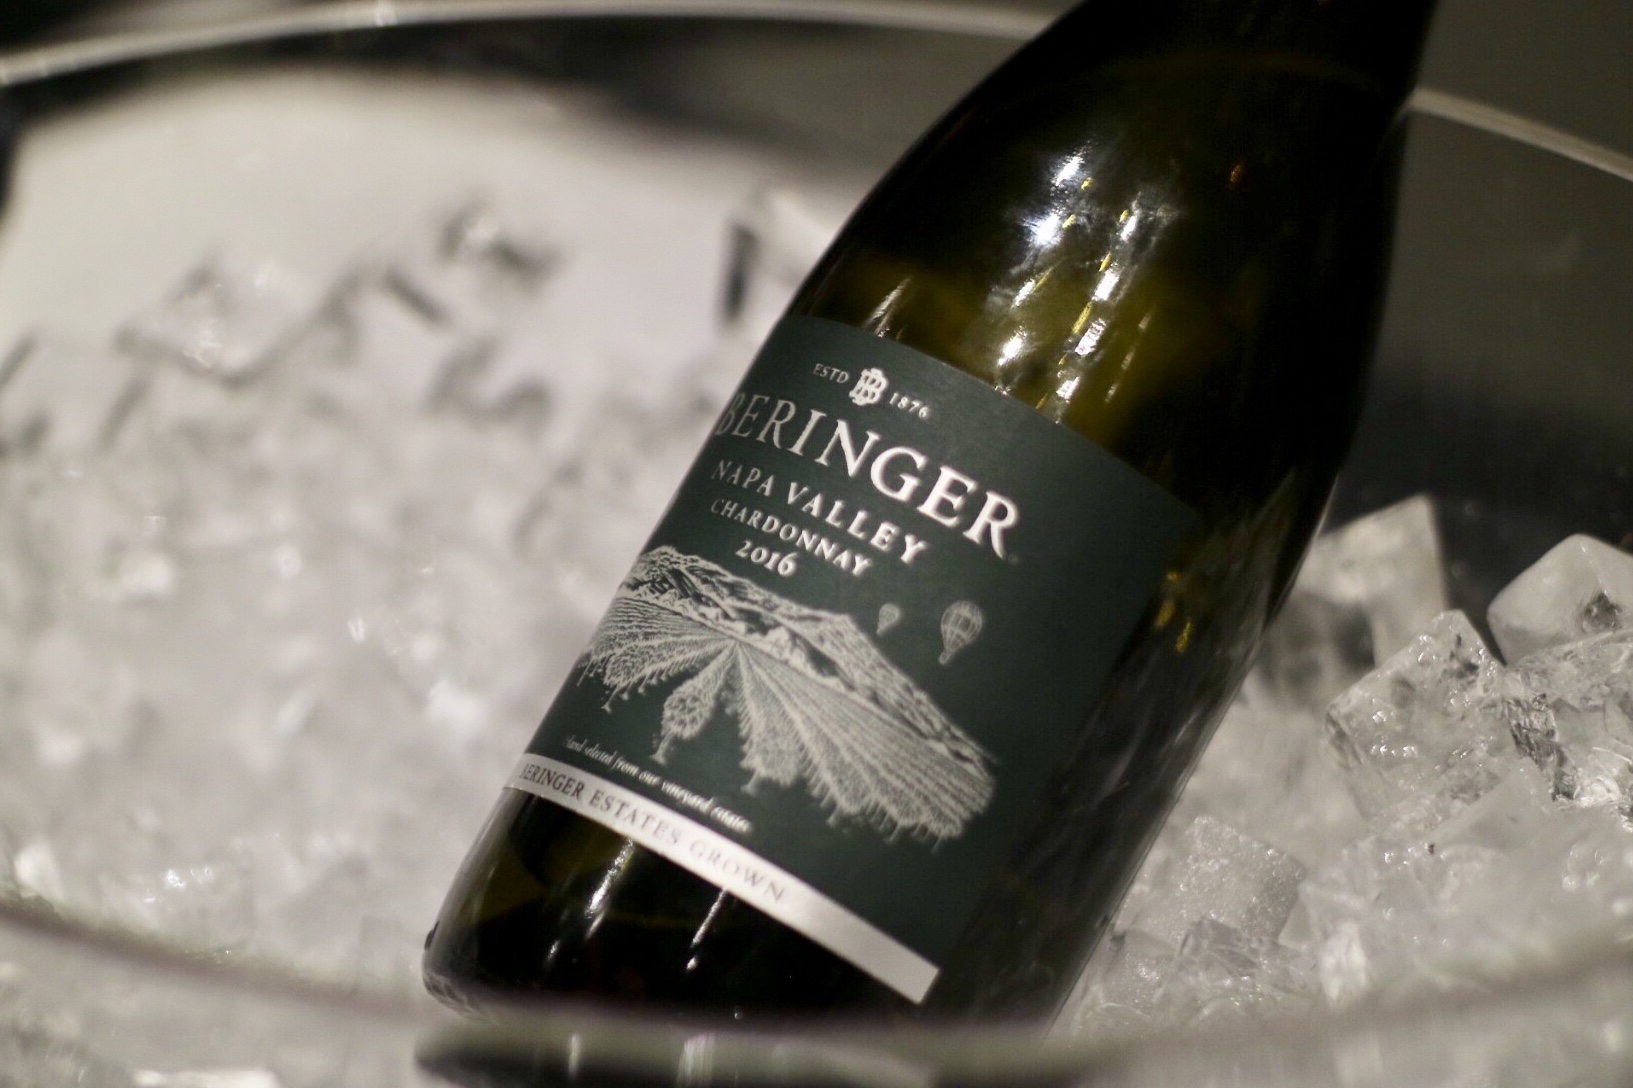 Beringer Vineyards Napa Valley Chardonnay 2016